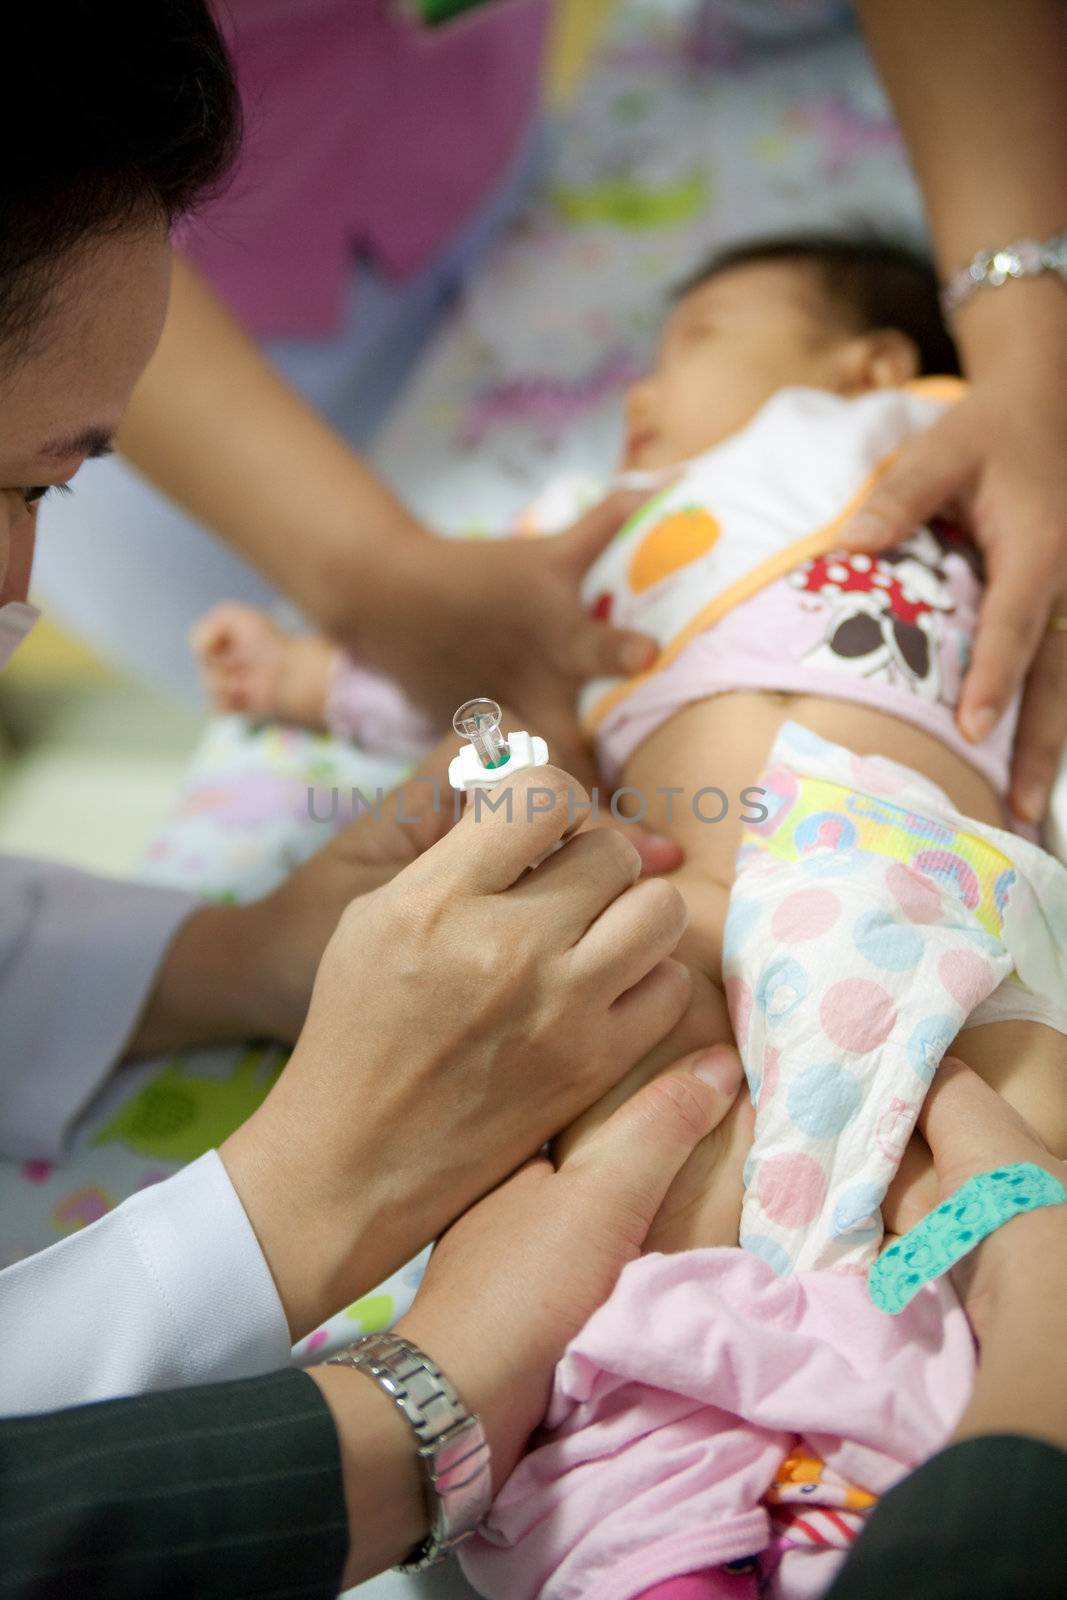 Vaccinated children. by duron123